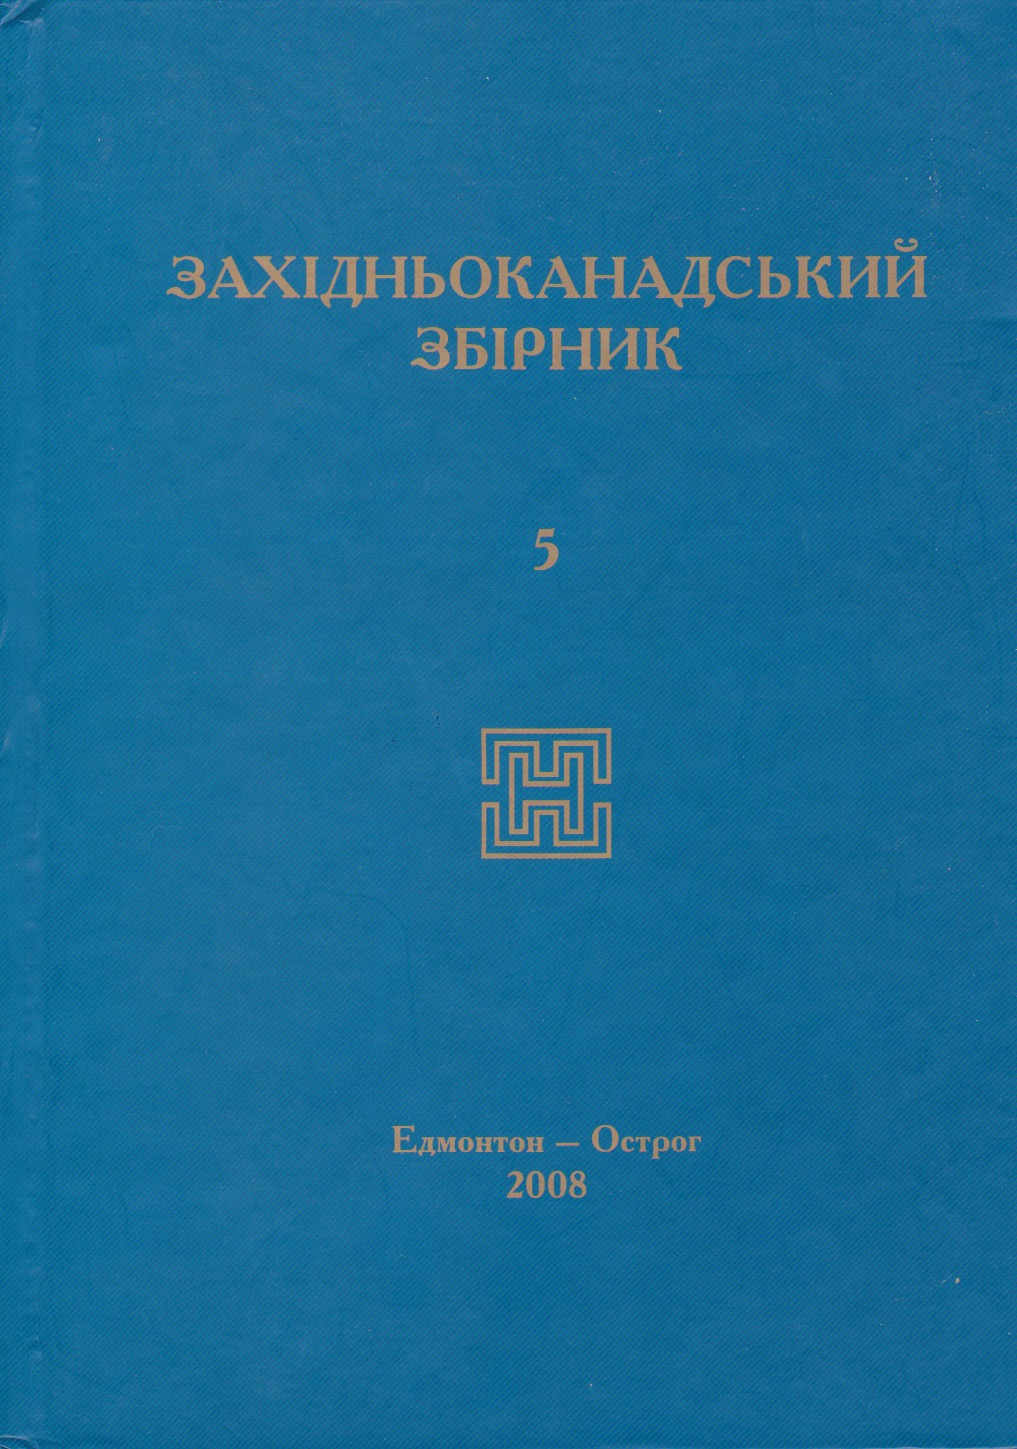 zbirnyk-5-cover